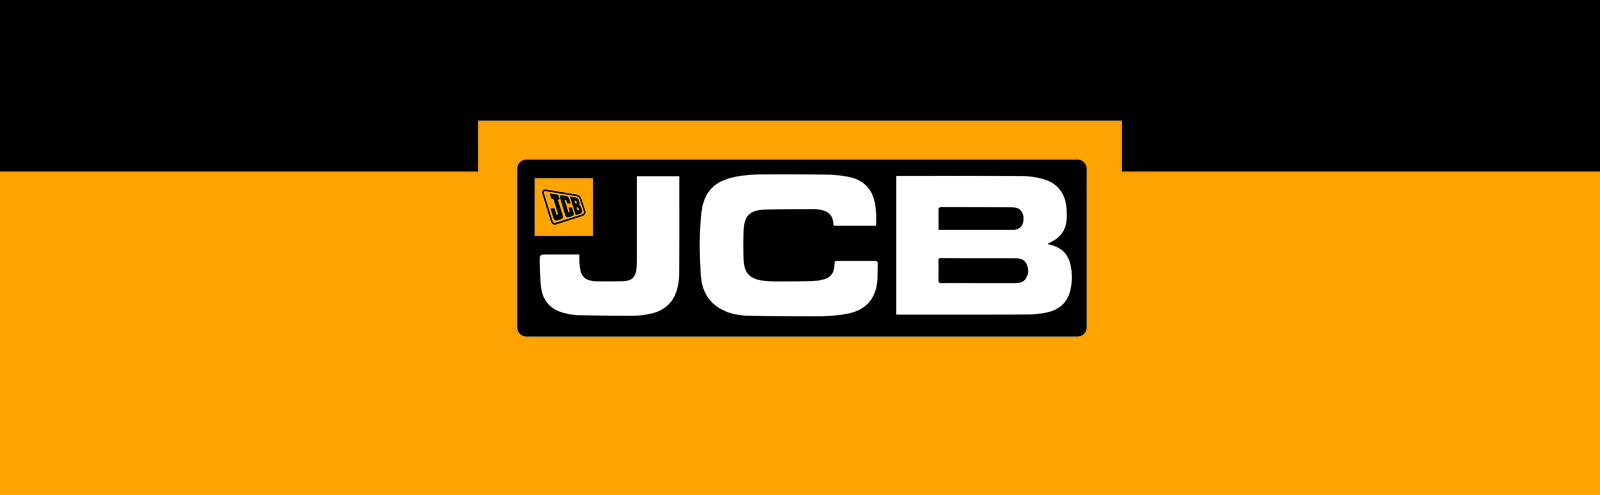 Banner JCB